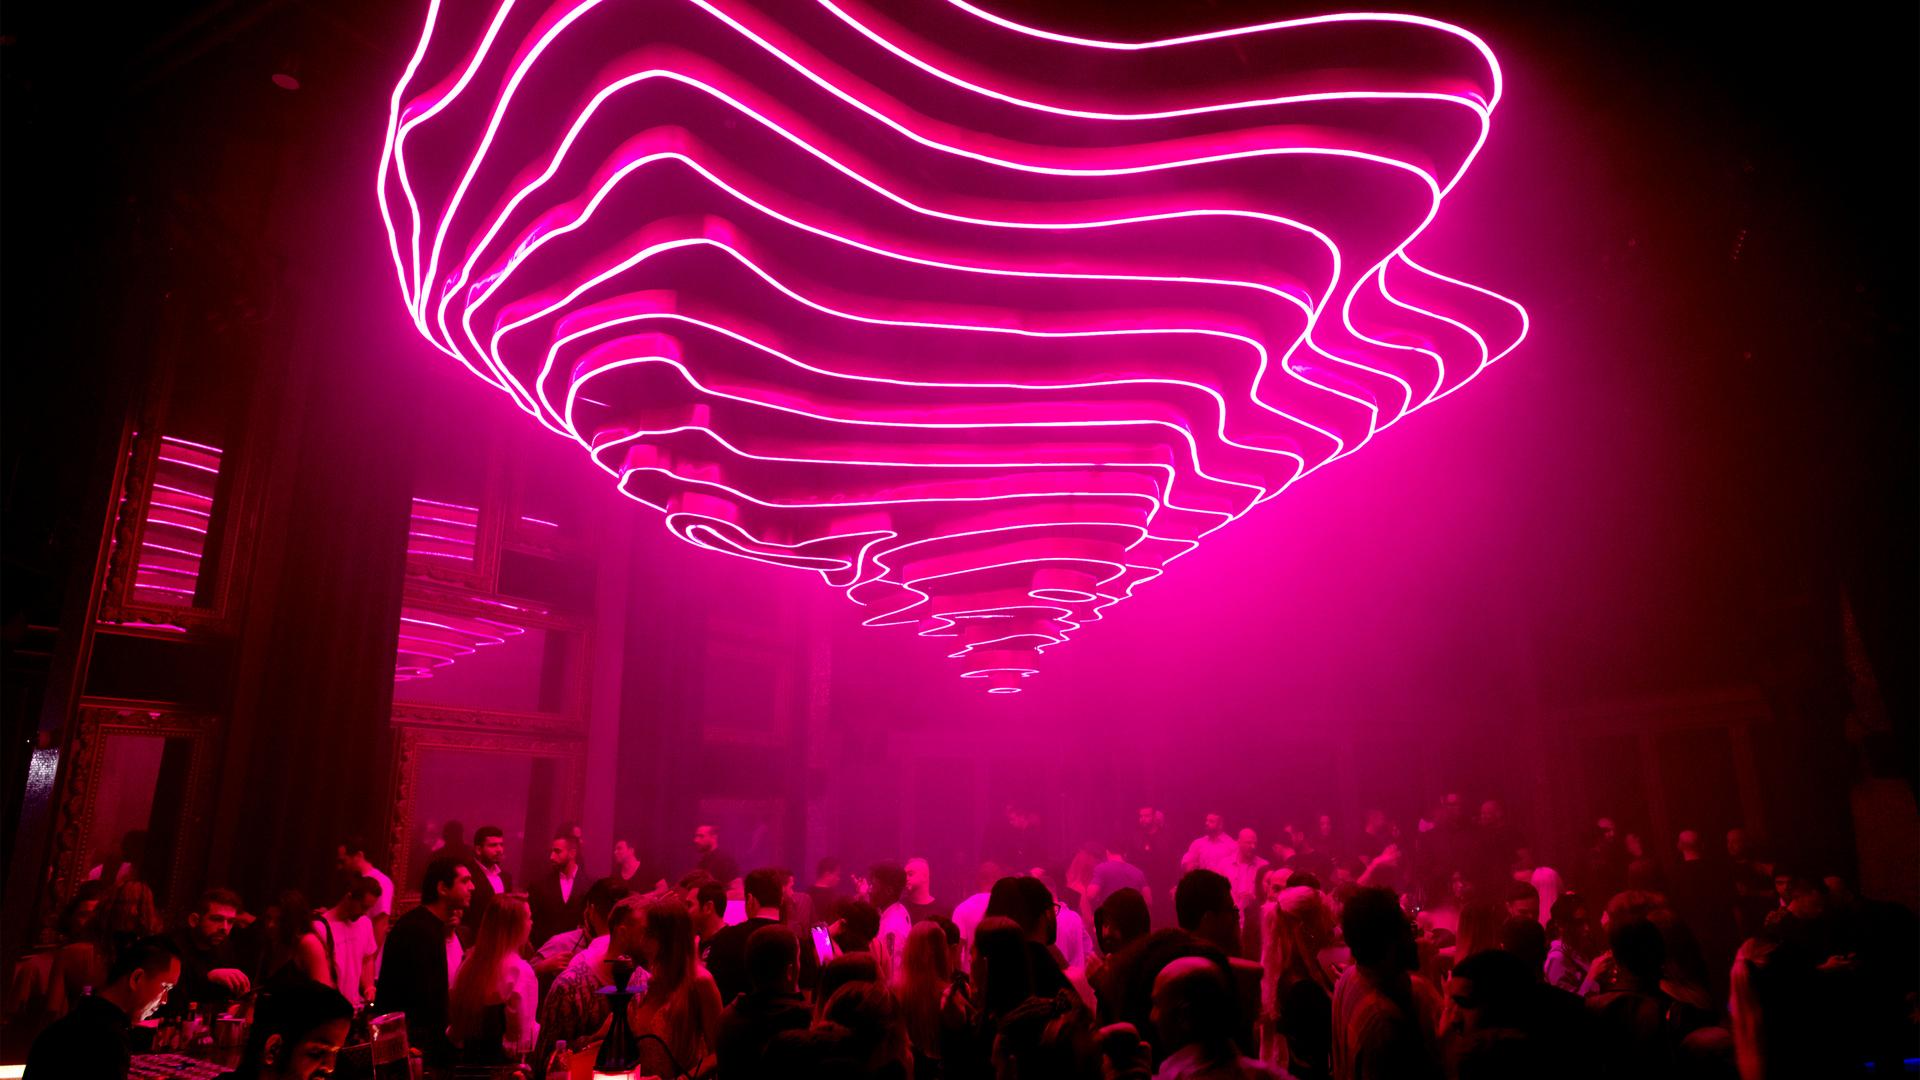 PROLIGHTS upgrades Privilege Club in Dubai with stunning illumination